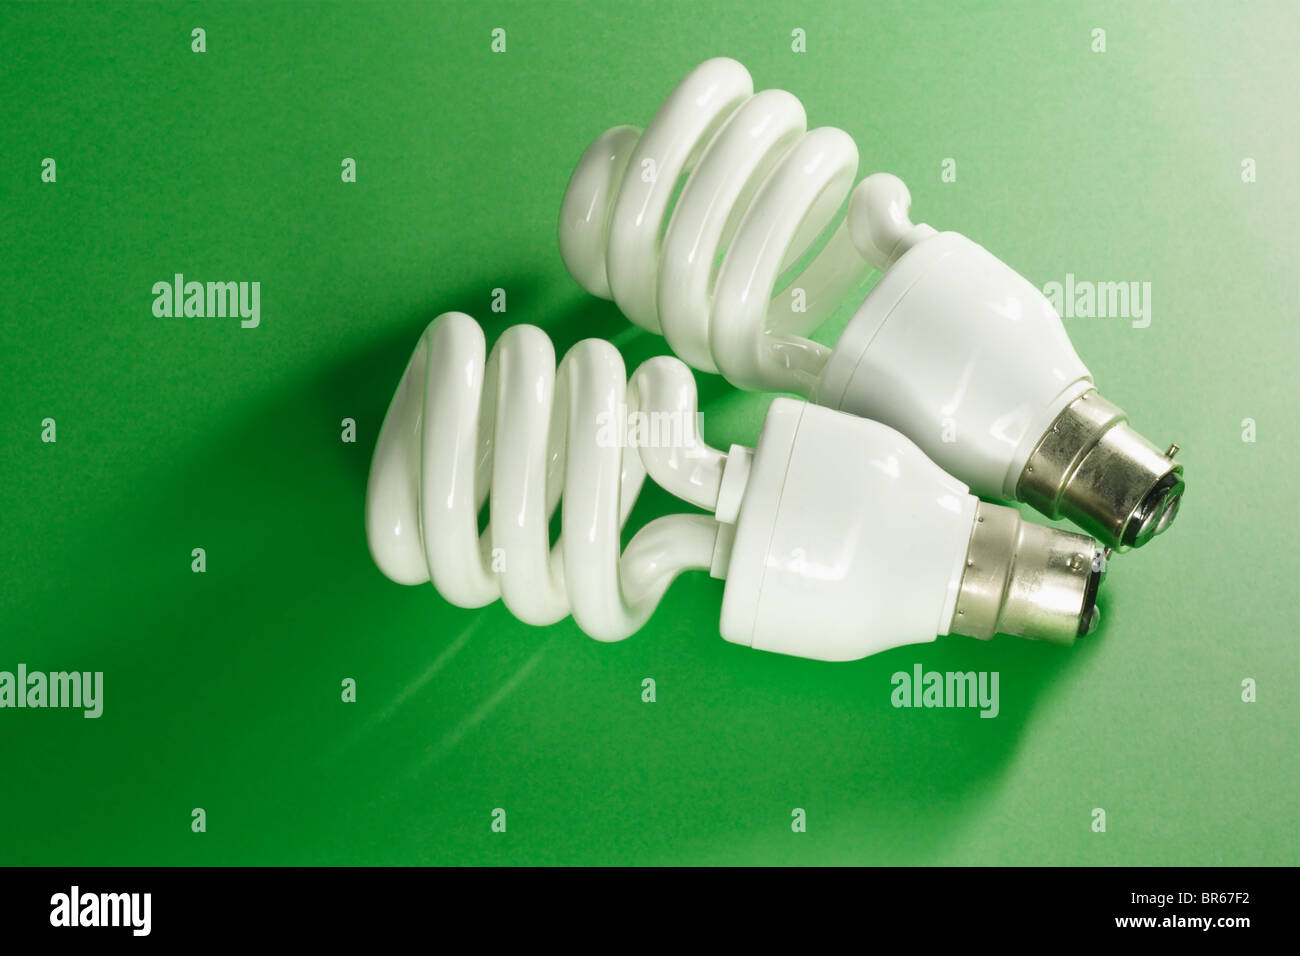 Energy saving light bulbs on green background Stock Photo